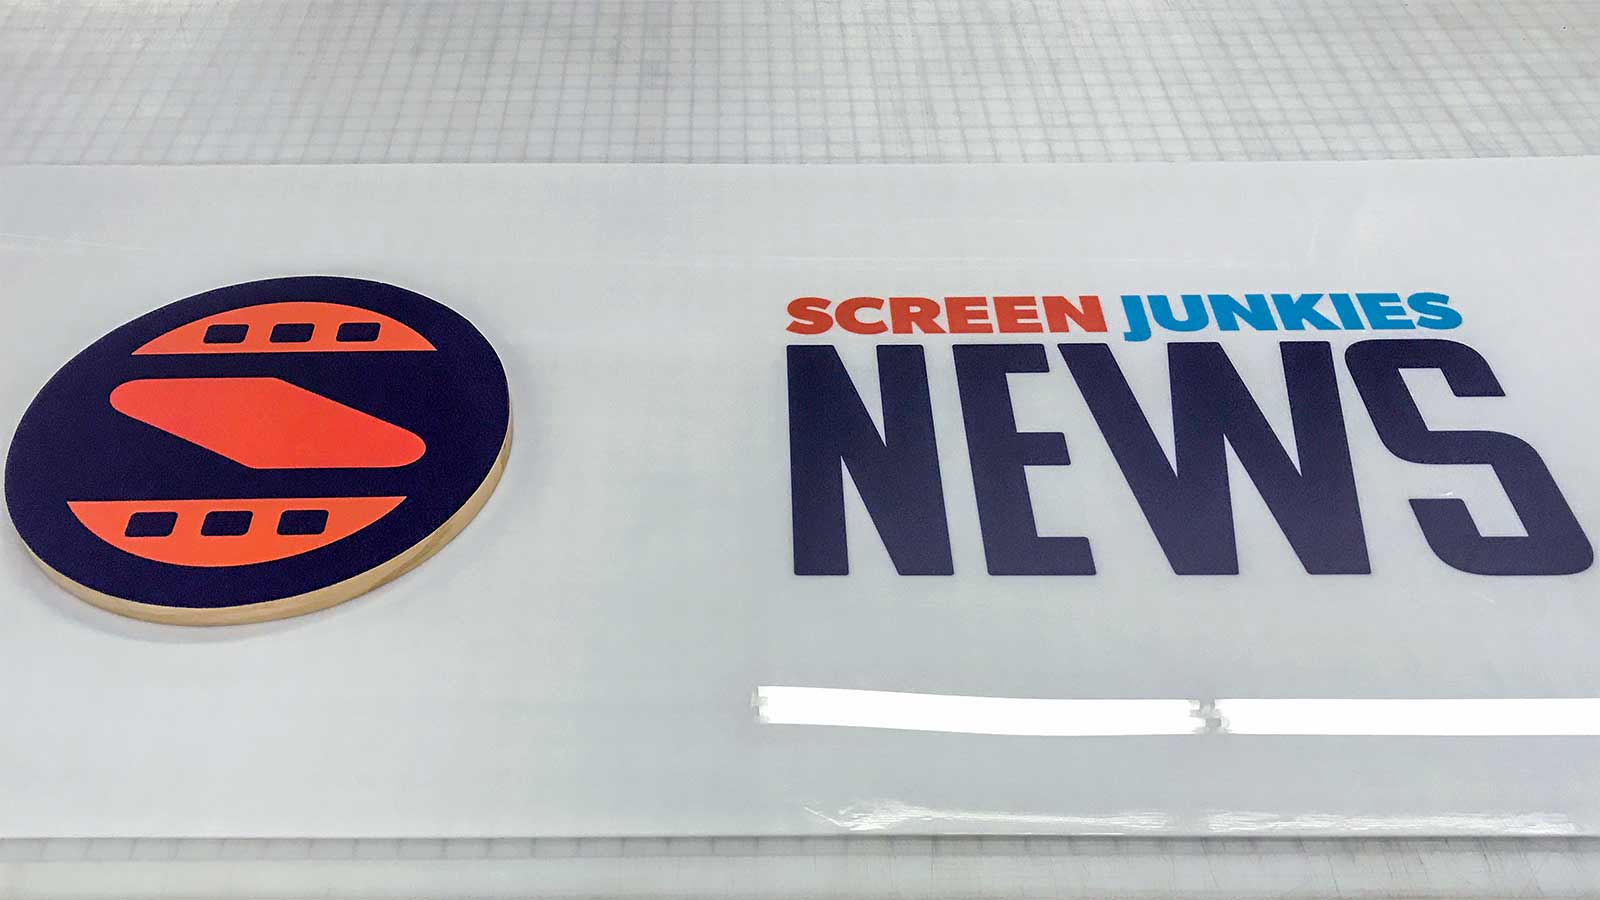 screen junkies news custom logo sign